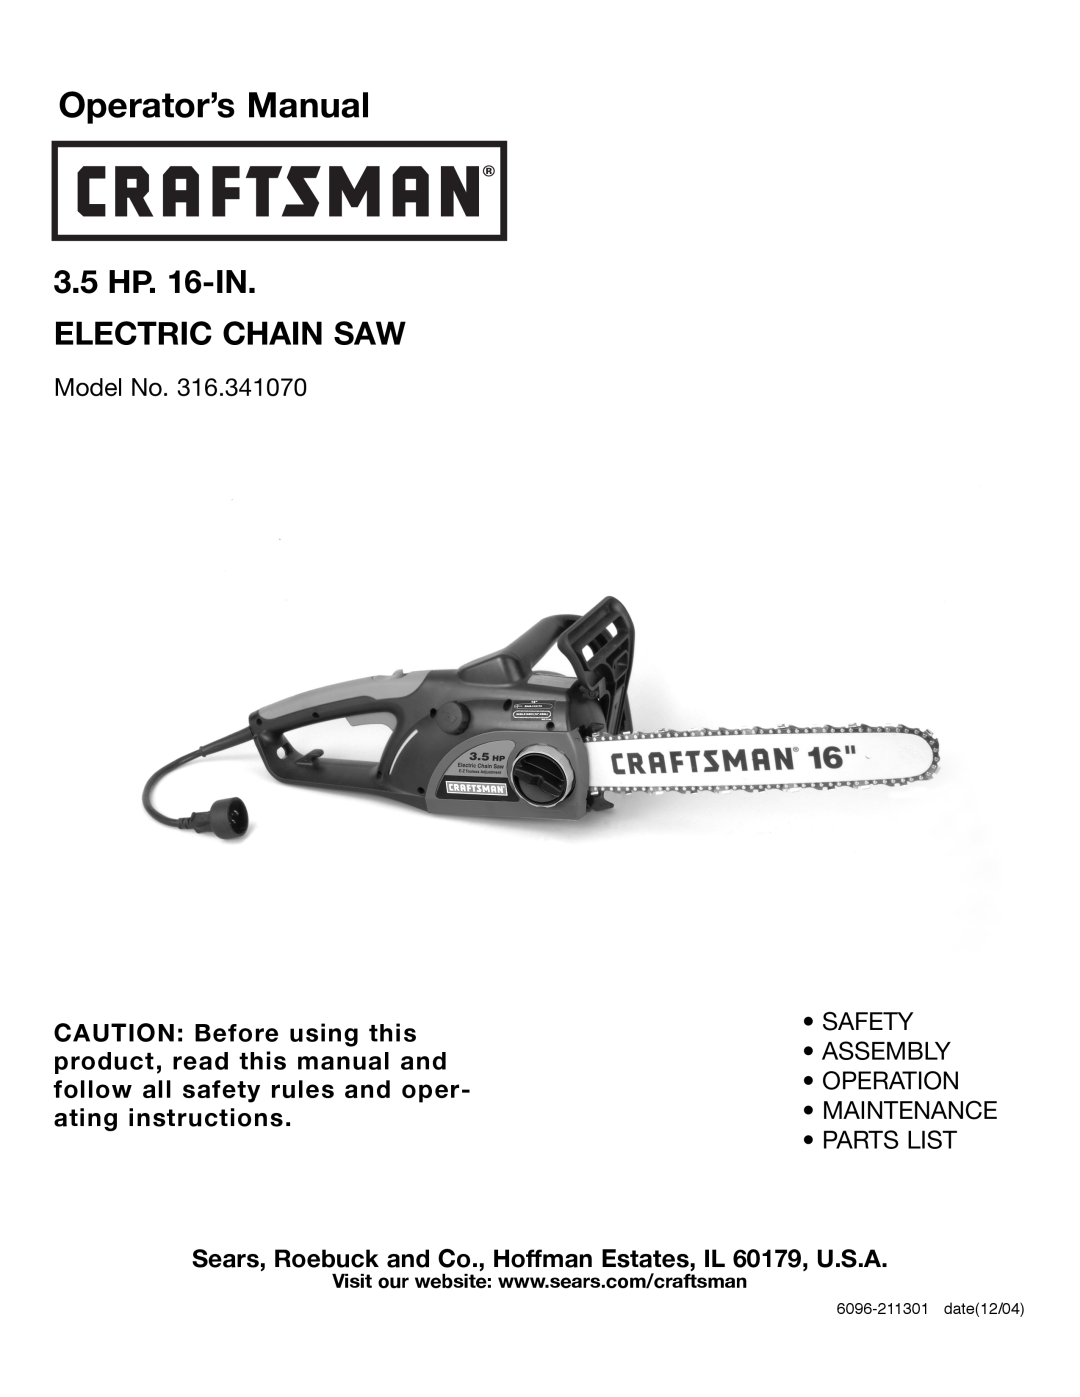 Craftsman 316.34107 manual Operator’s Manual, Sears, Roebuck and Co., Hoffman Estates, IL 60179, U.S.A, Model No 